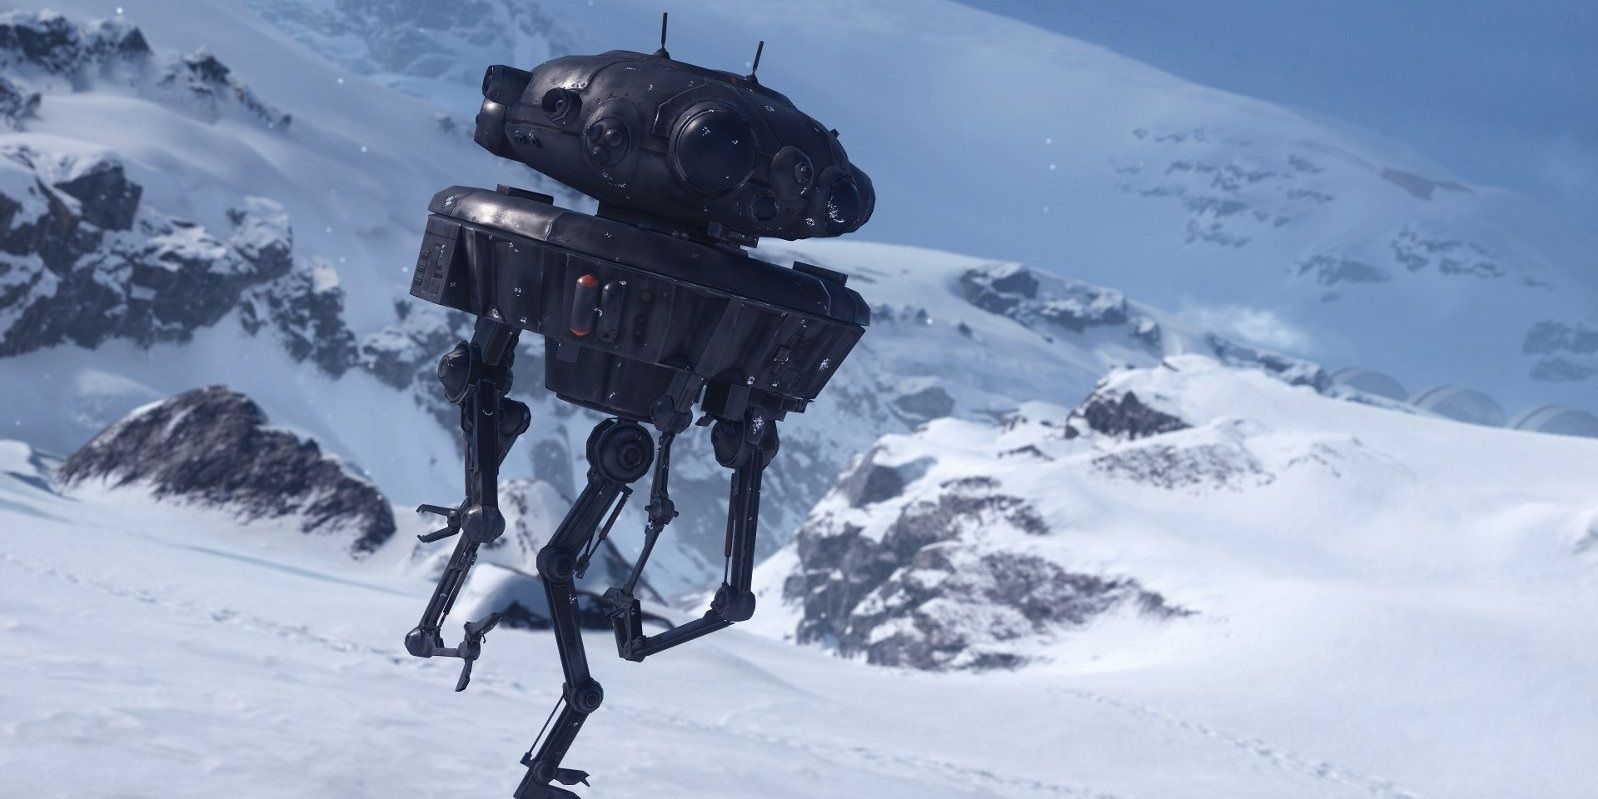 Viper probe droid in Star Wars Battlefront